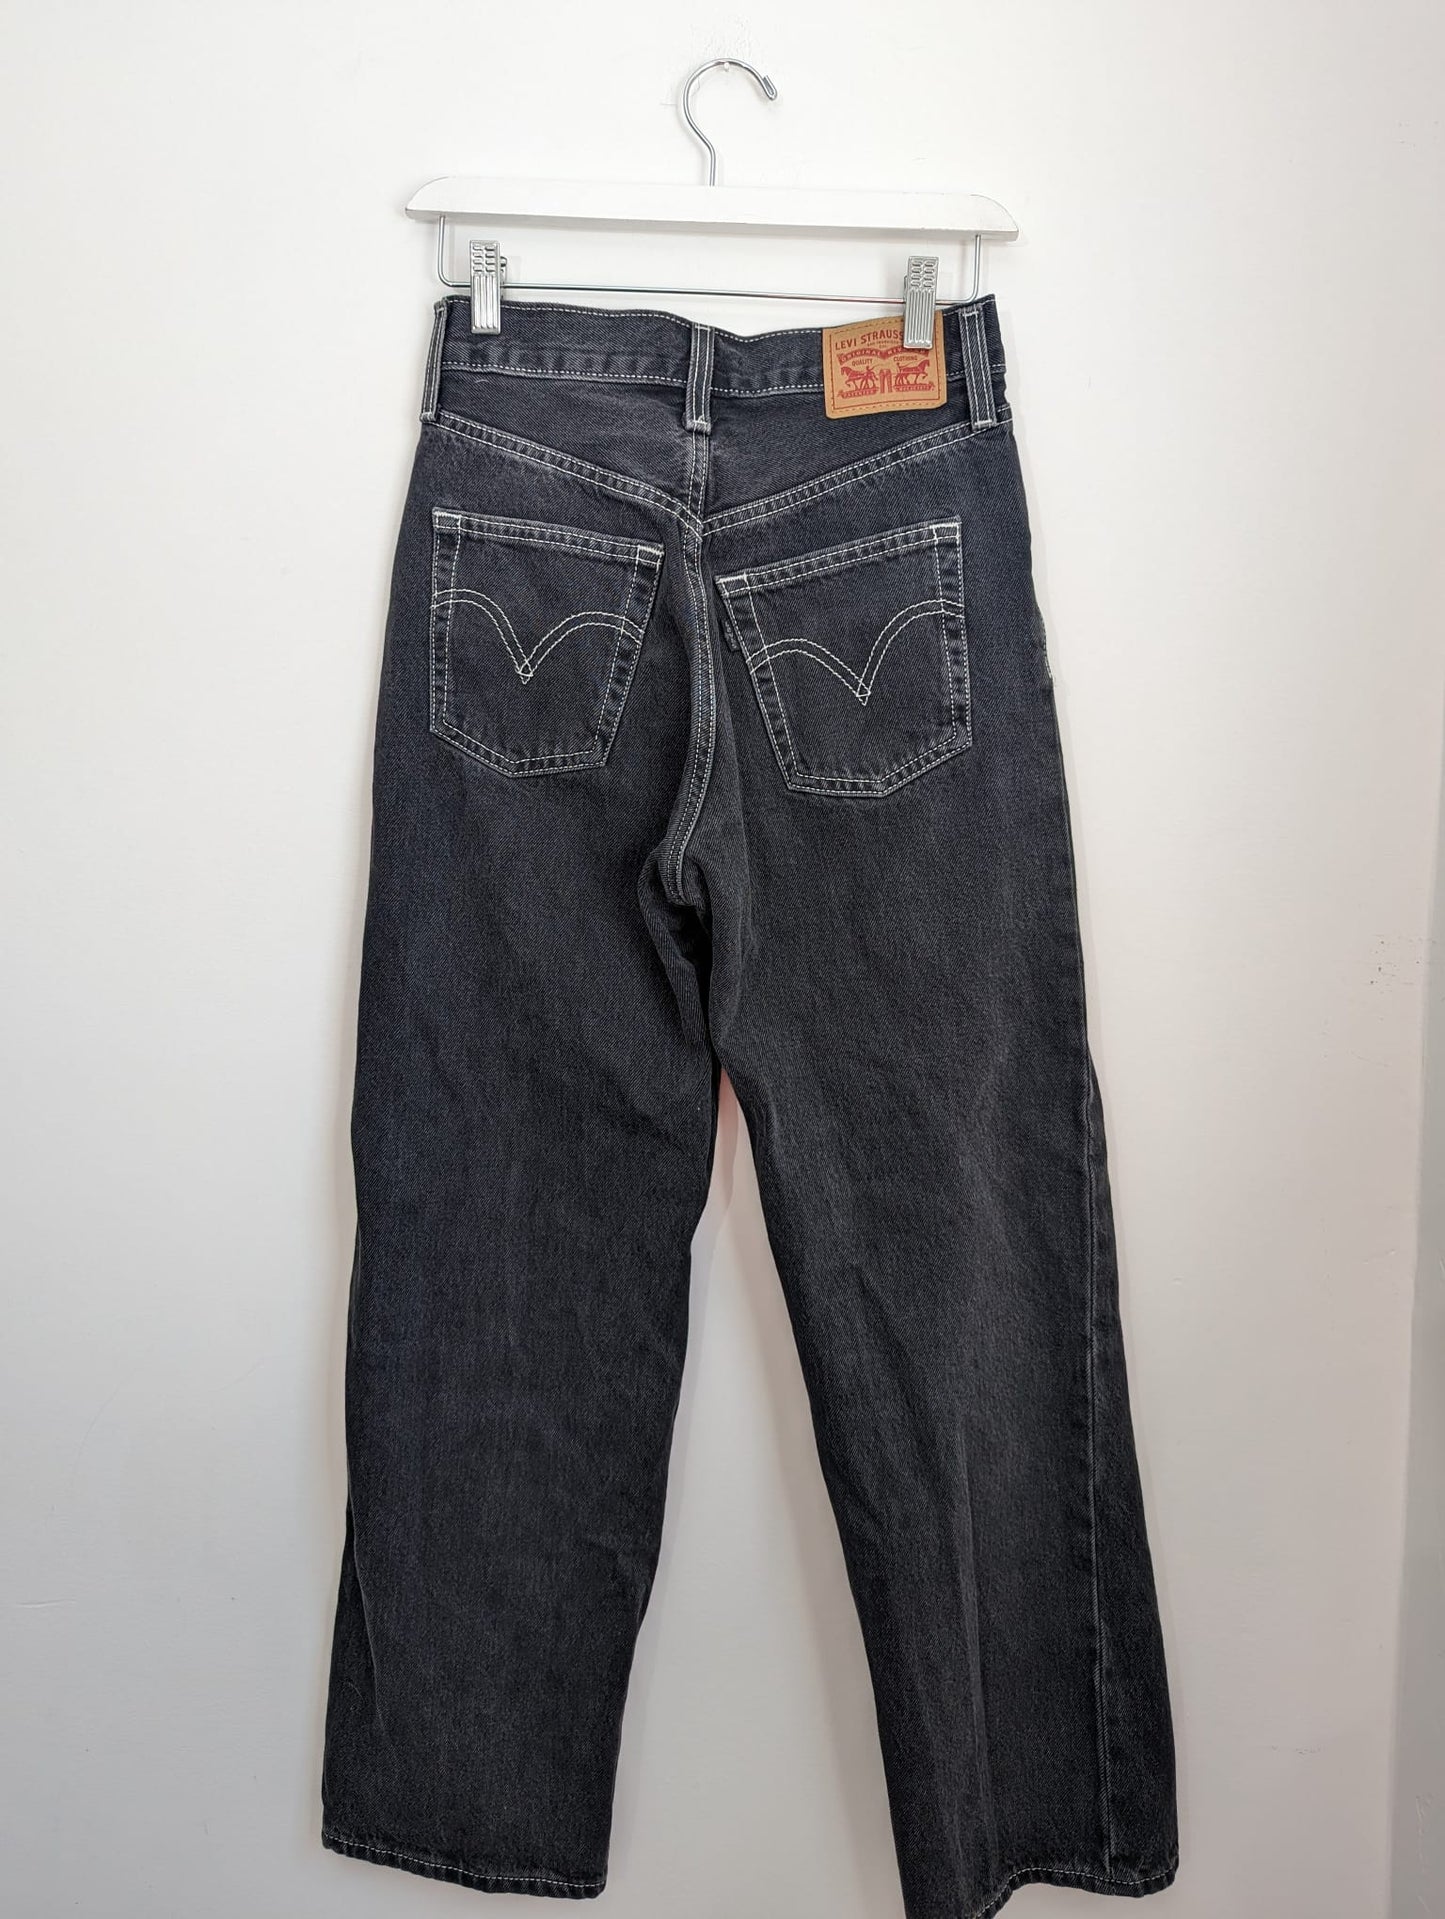 Levi's Black Ribcage Straight Ankle Vintage Jeans - Size 25